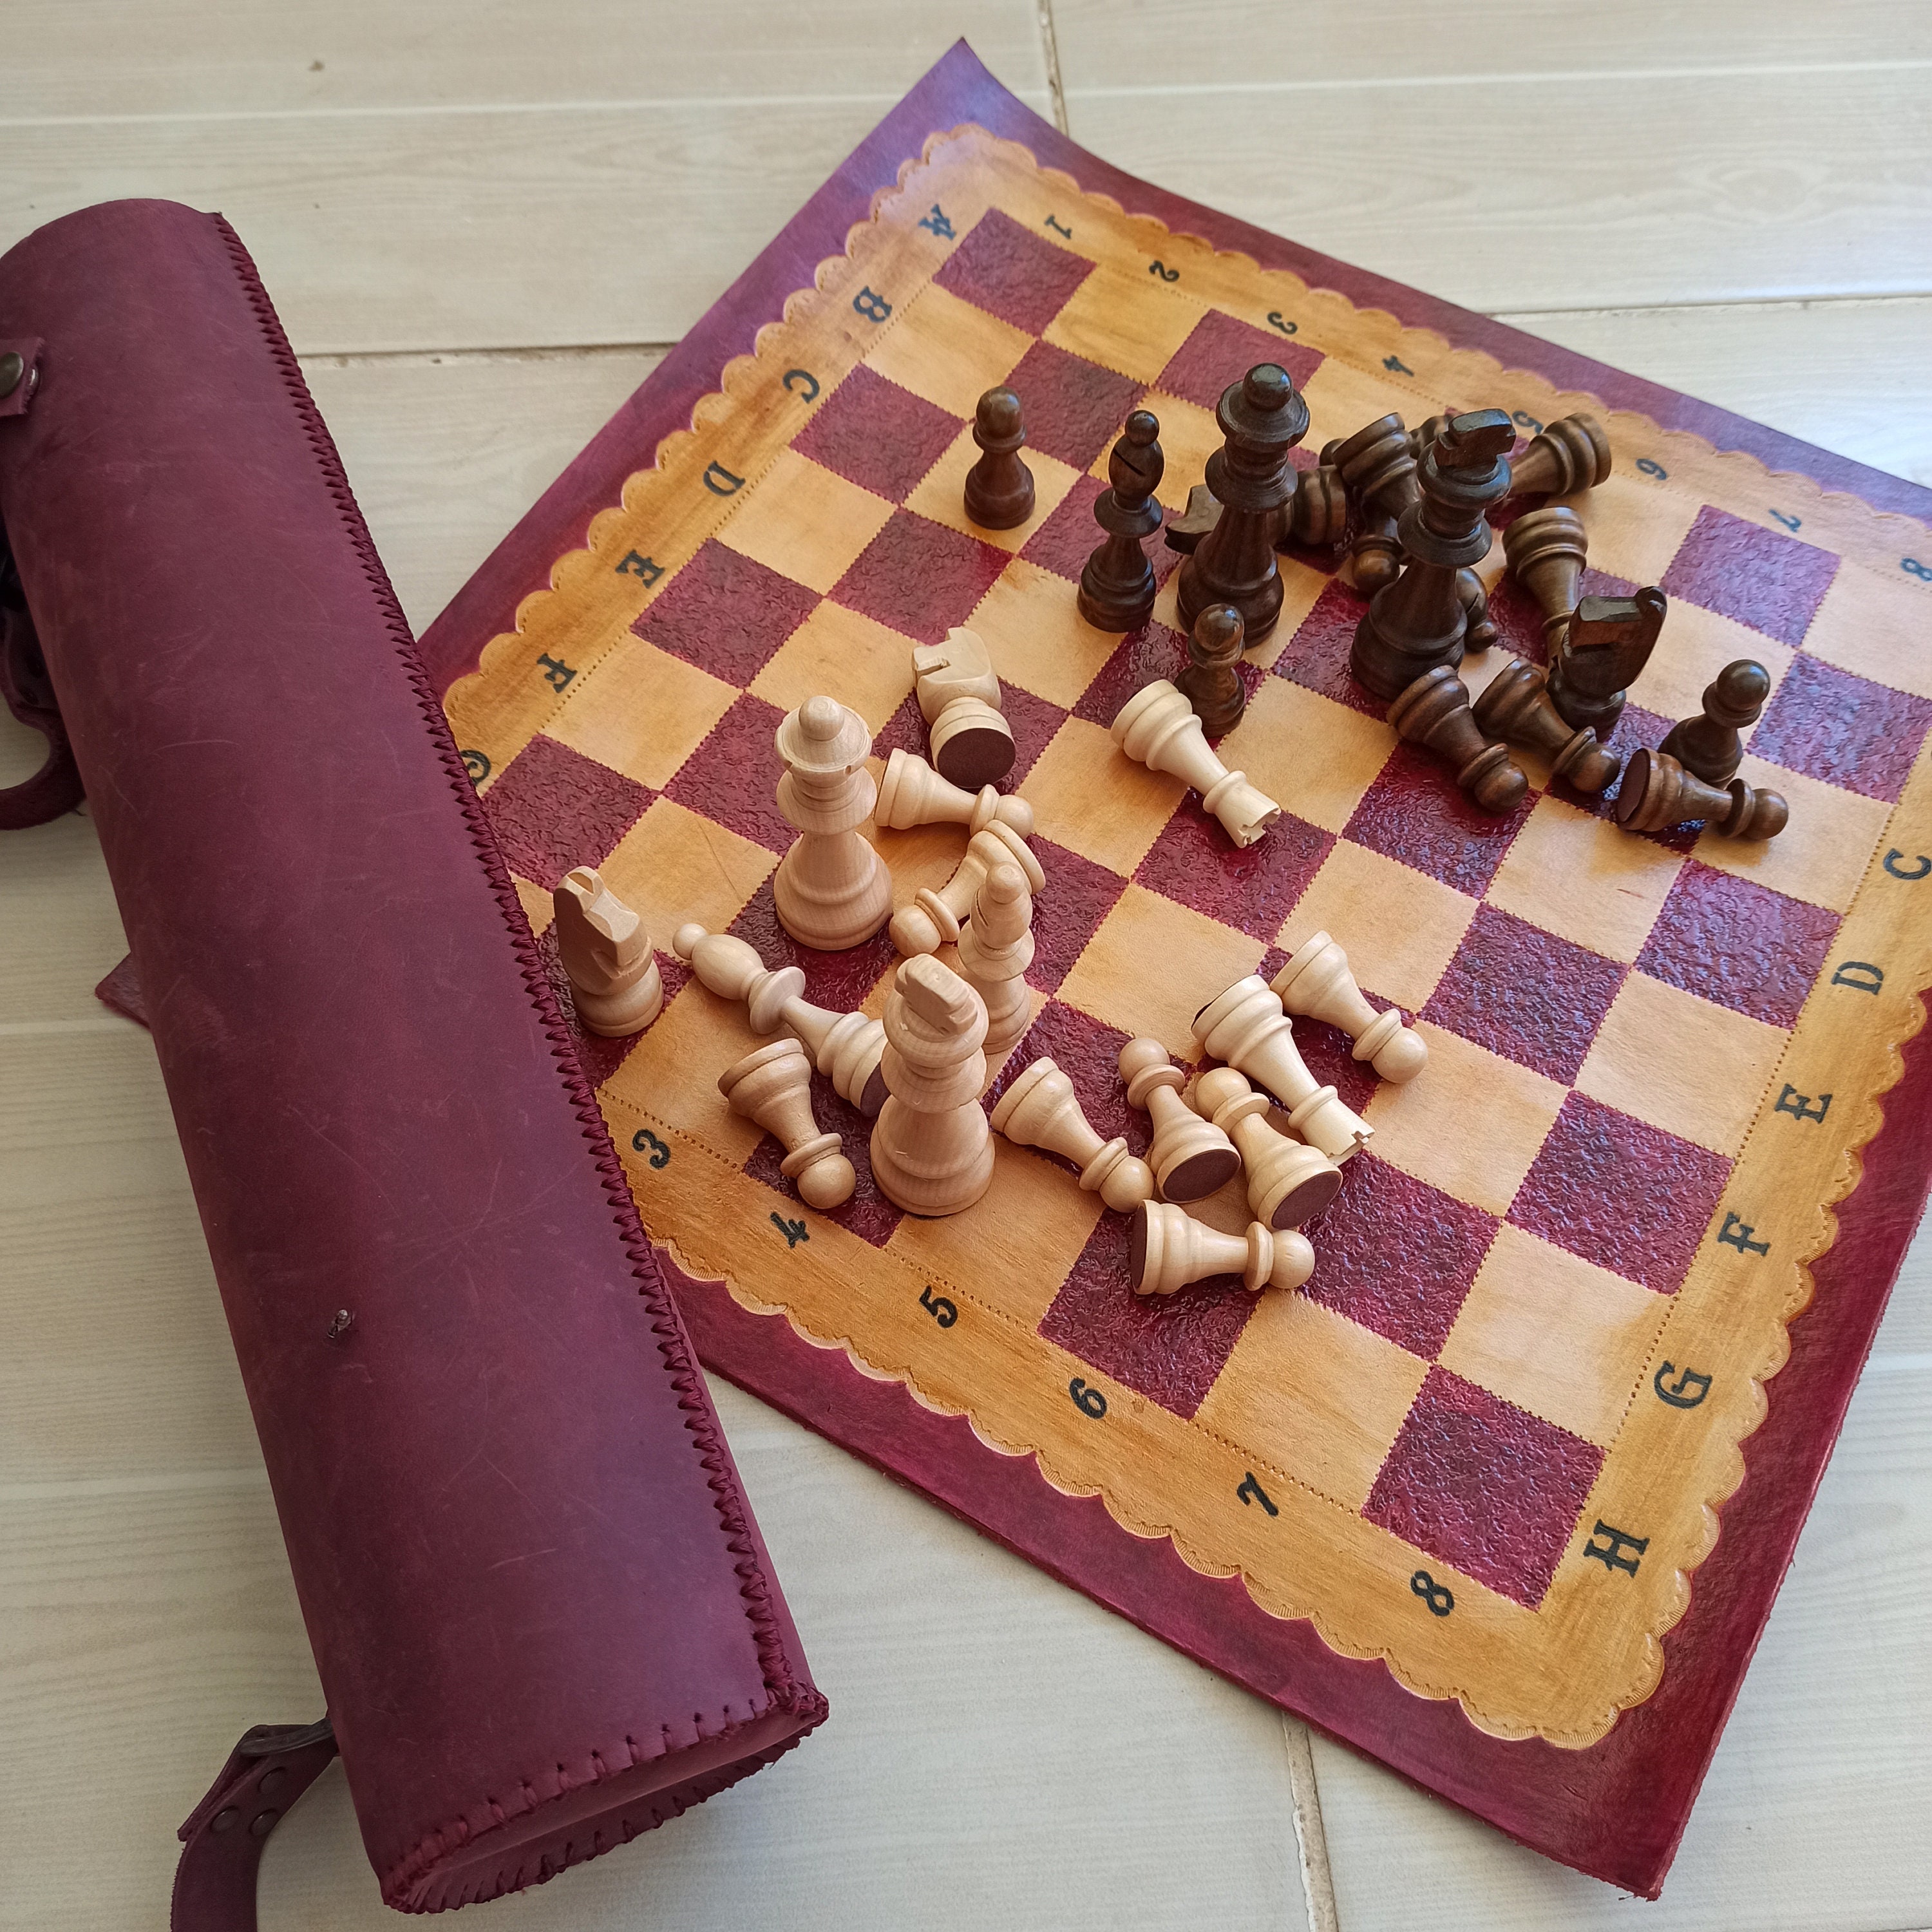 Leather Chess Board Roll, Chess Board International